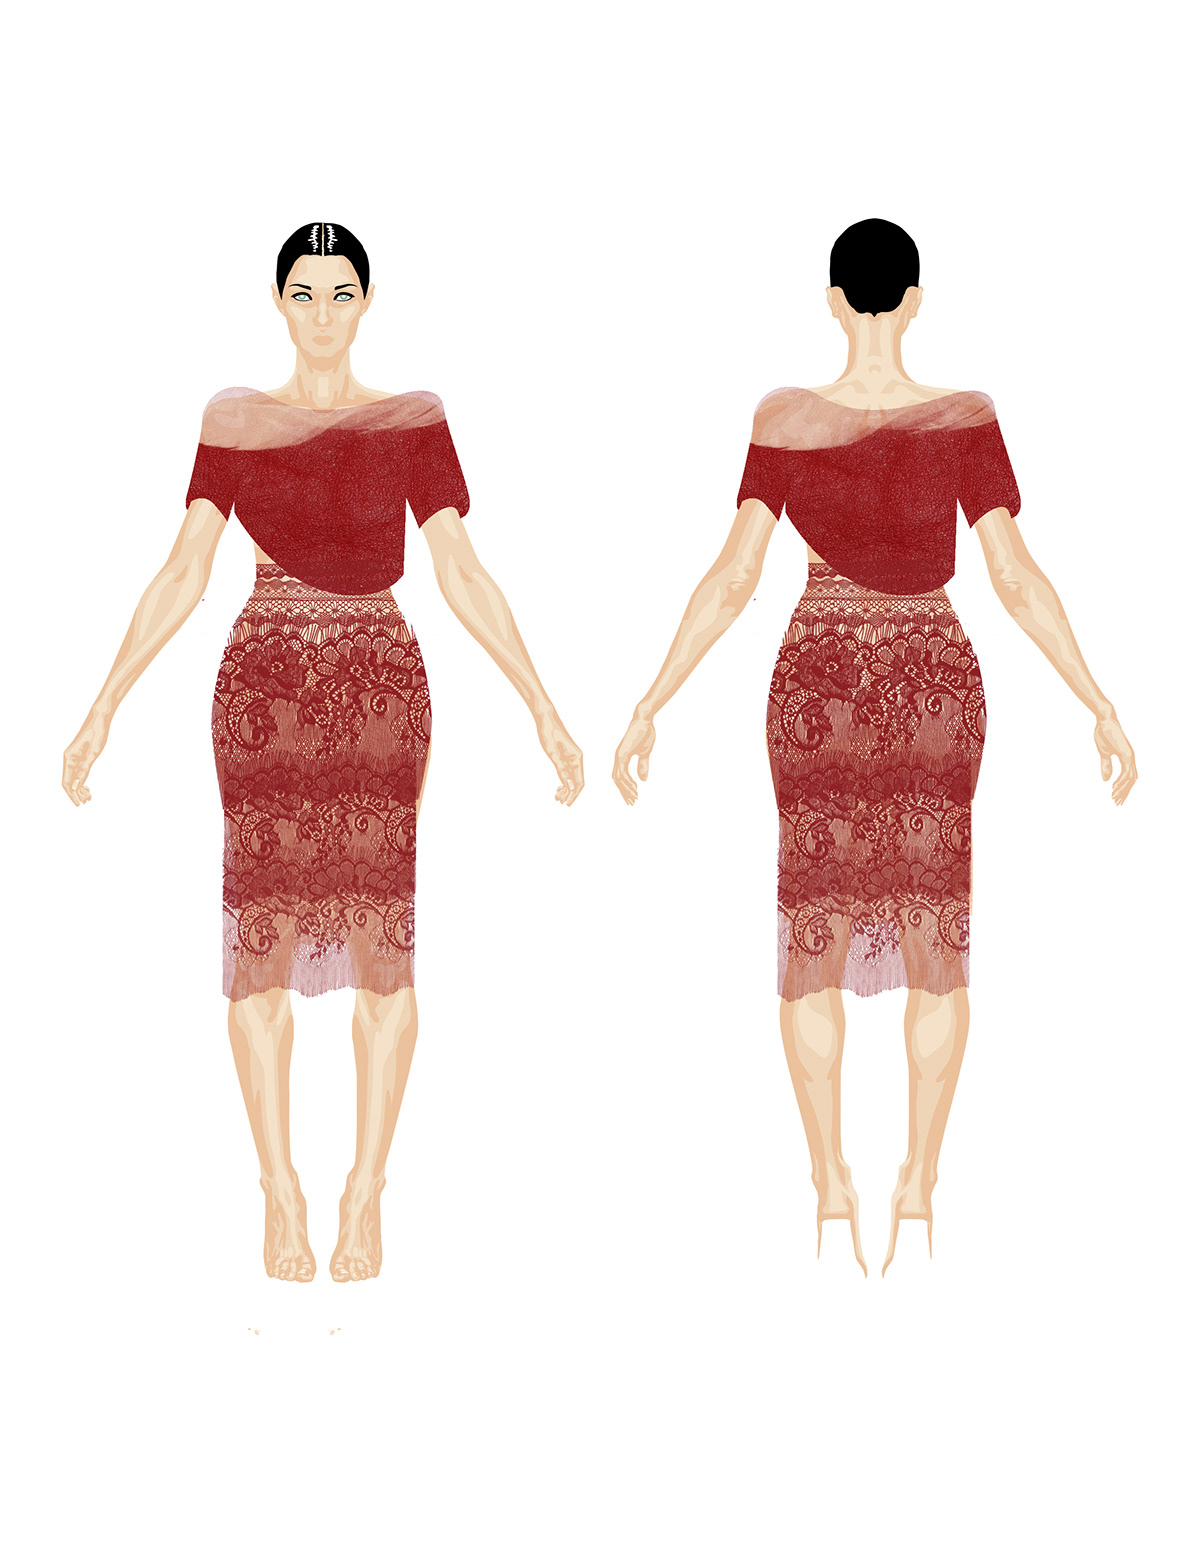 anatomy fashioncollection women's fashion dress design fashion design